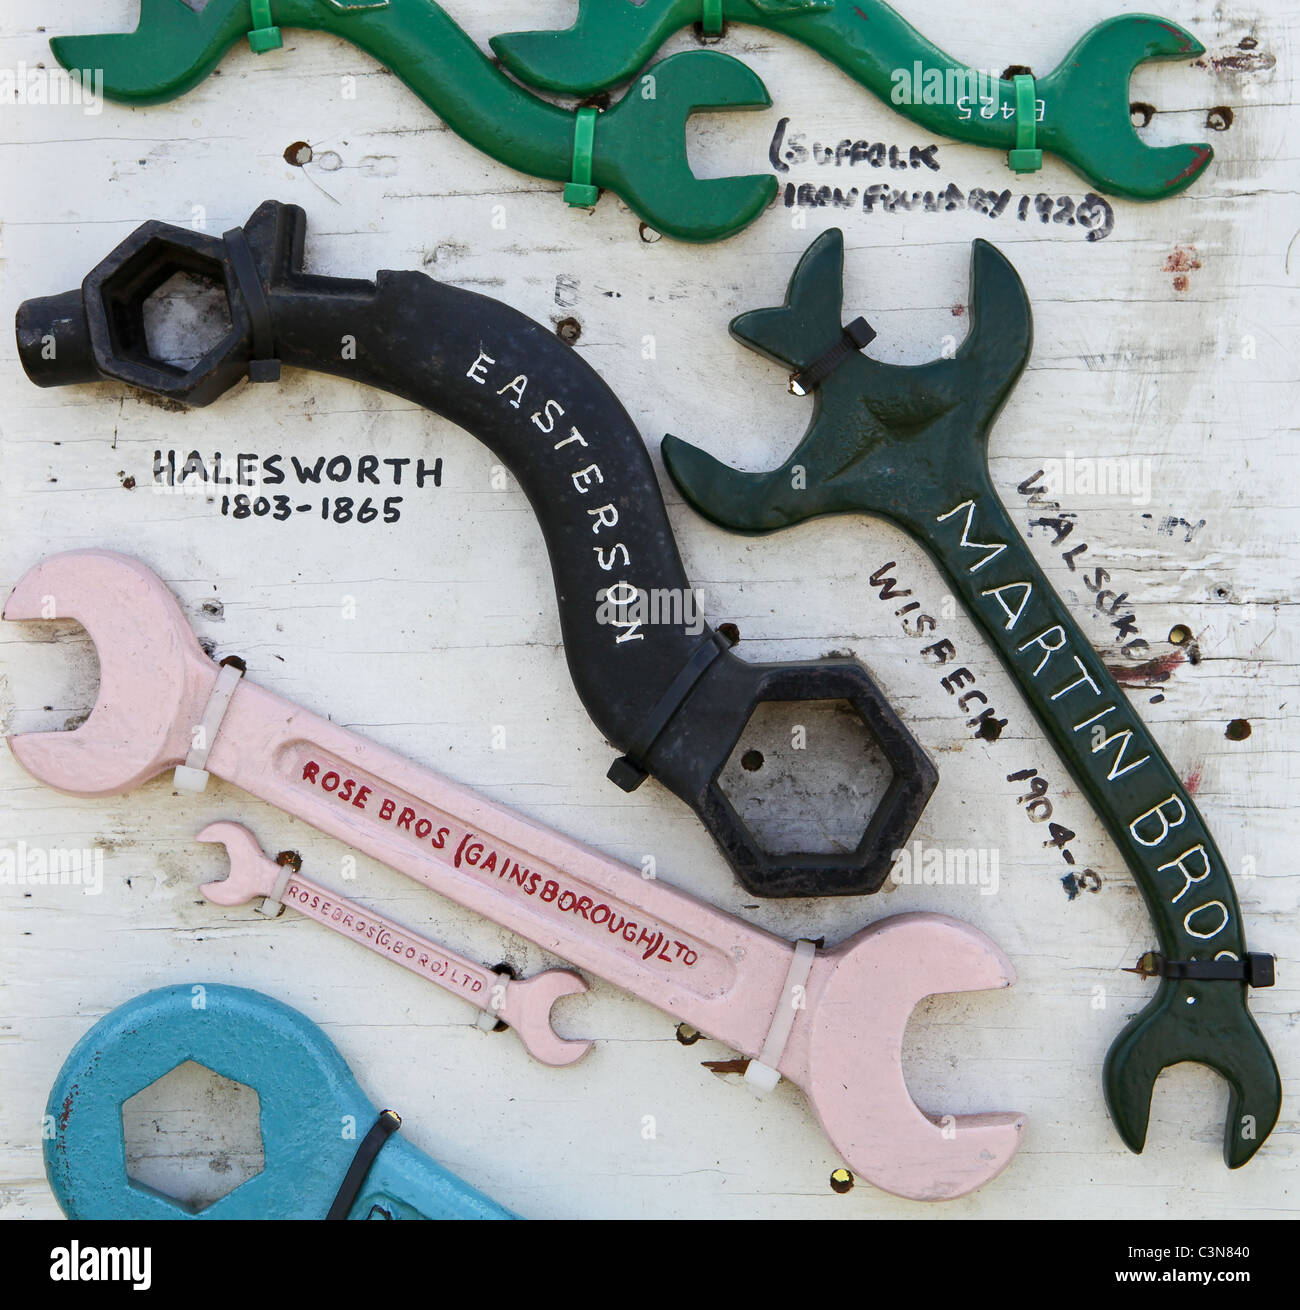 Display of old metal work tools Stock Photo